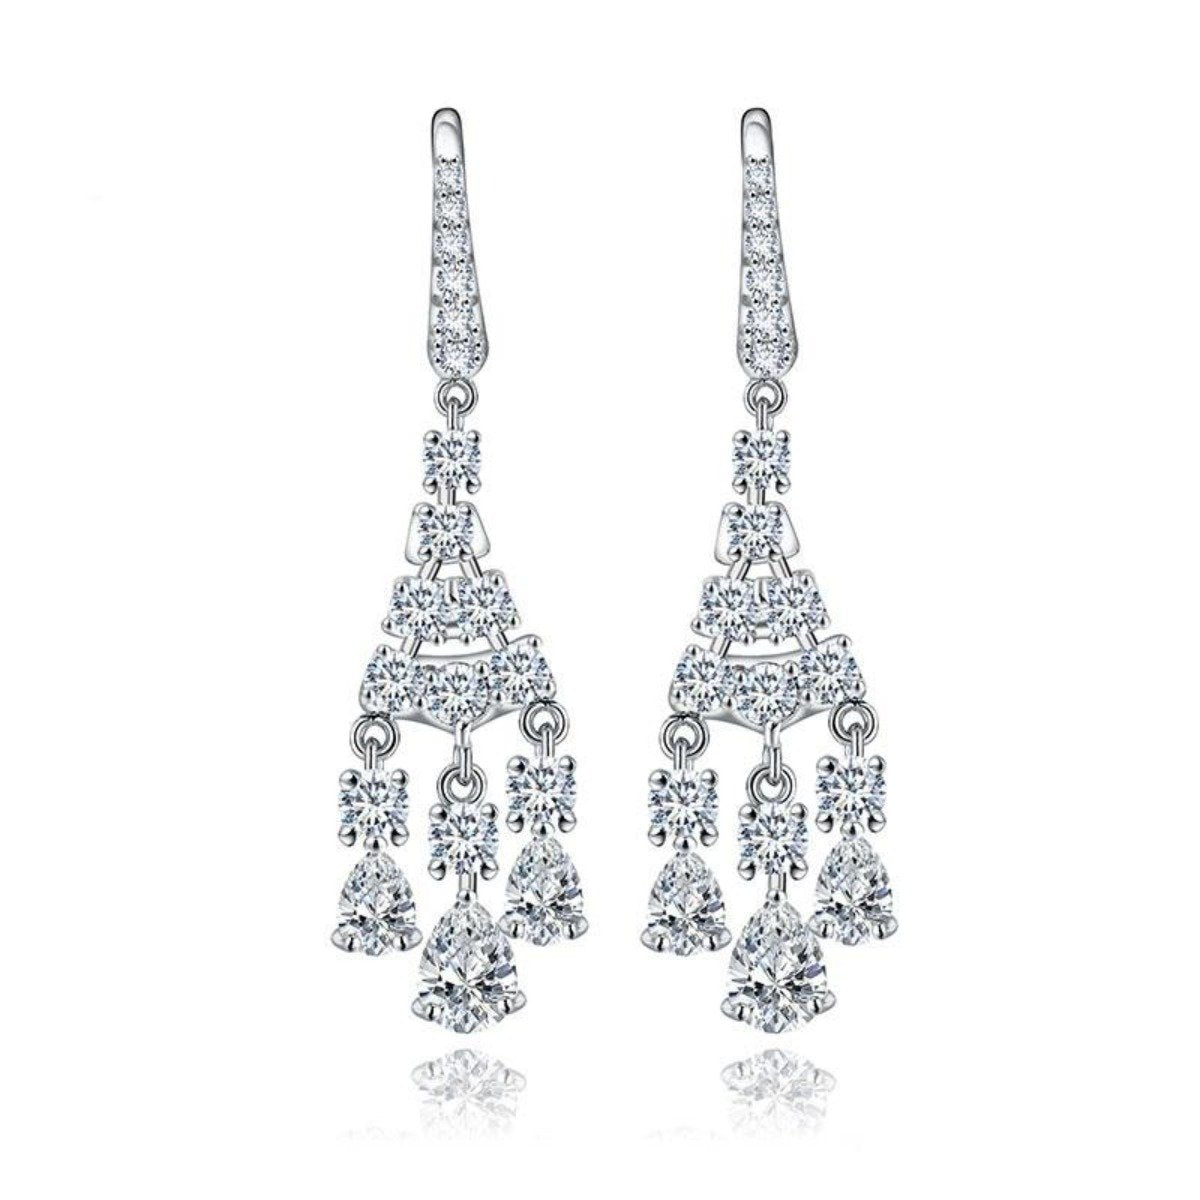 Simple Dangle Chandelier Earrings for Weddings & Events